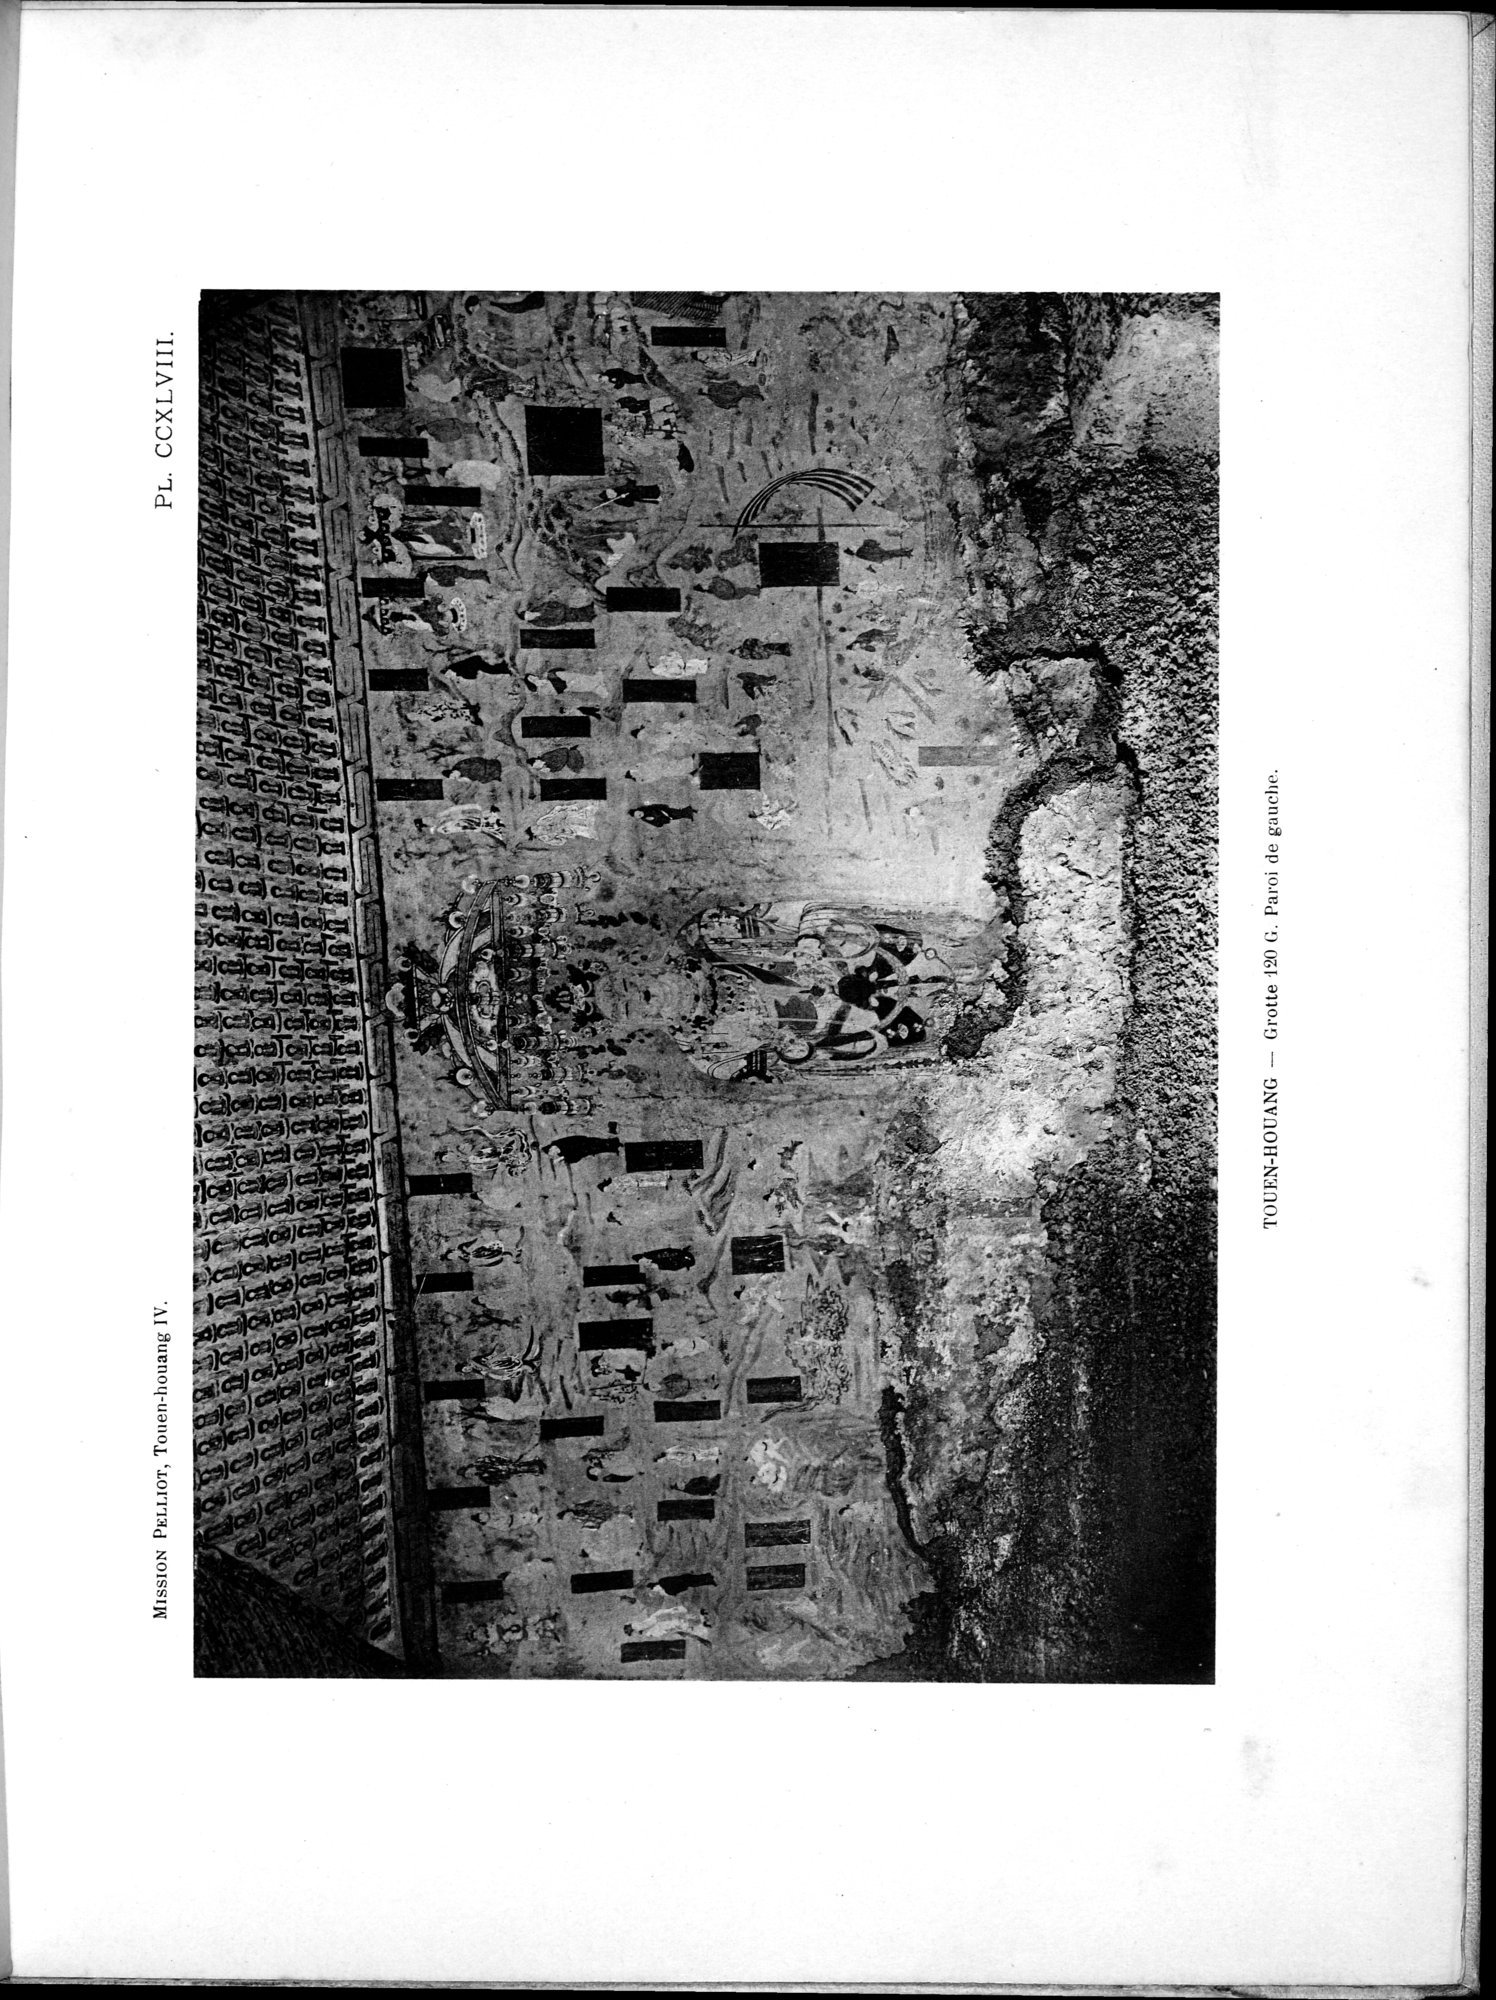 Les grottes de Touen-Houang : vol.4 / Page 121 (Grayscale High Resolution Image)